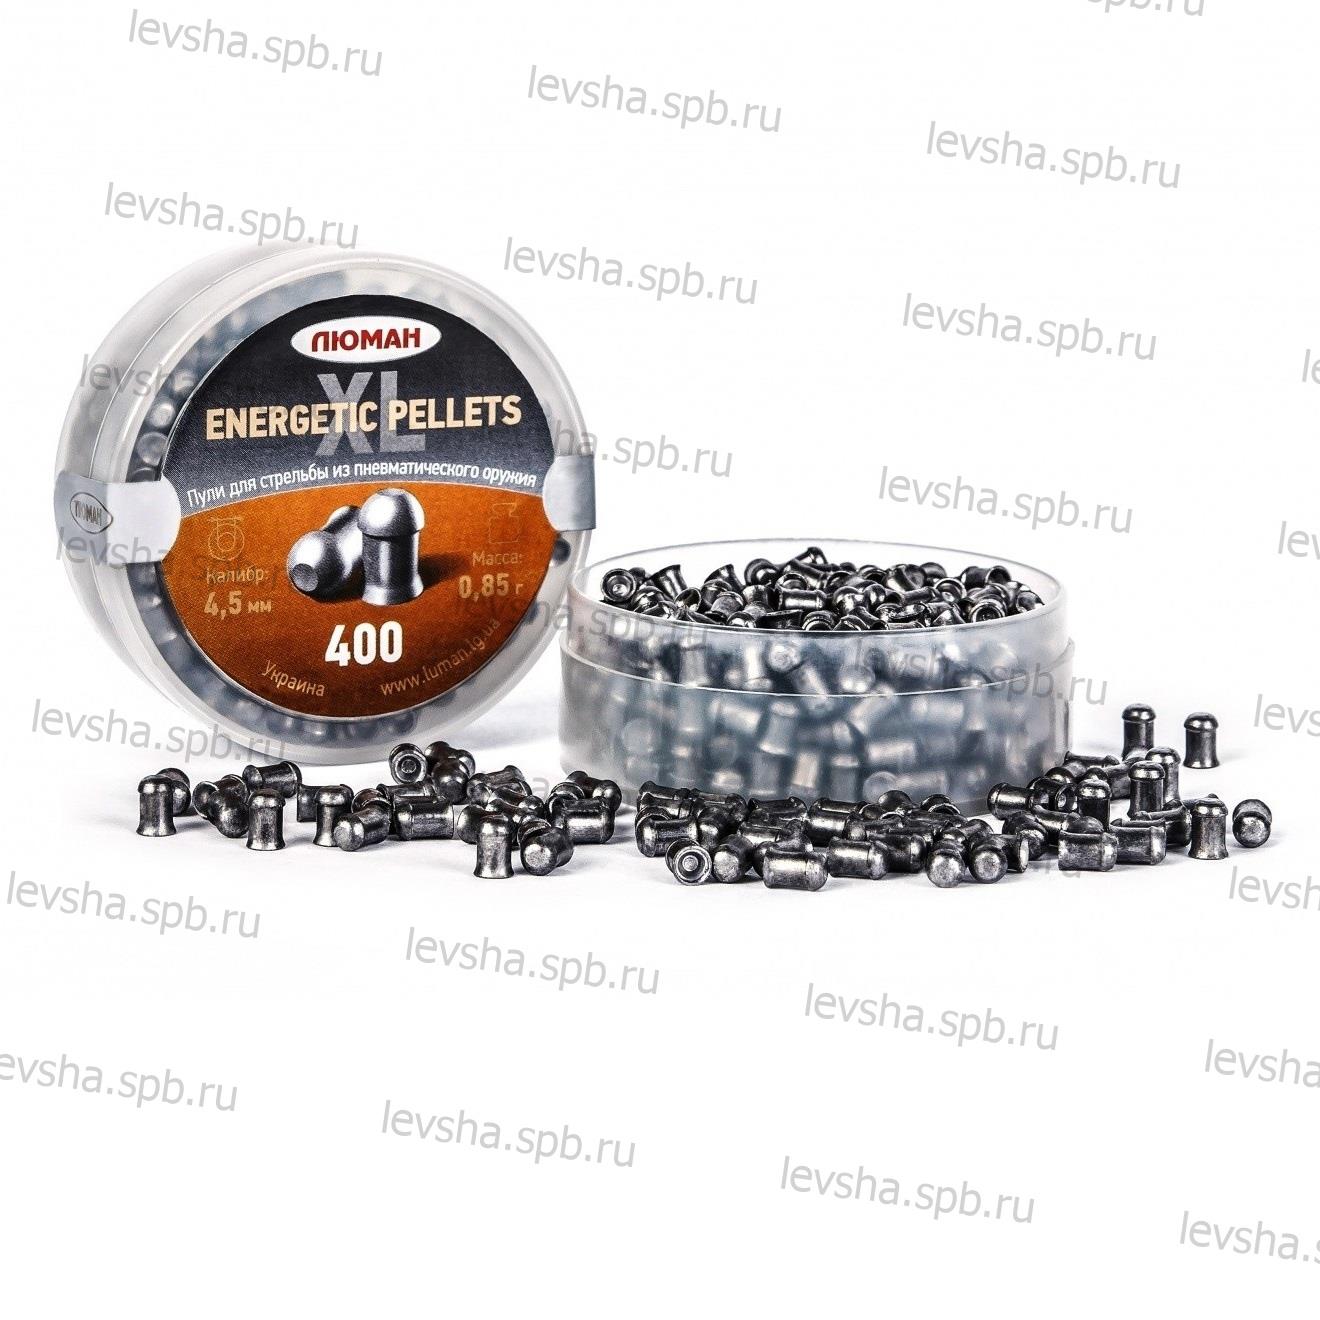 пули люман energetic pellets xl 4.5мм.0.85гр.(400) фото